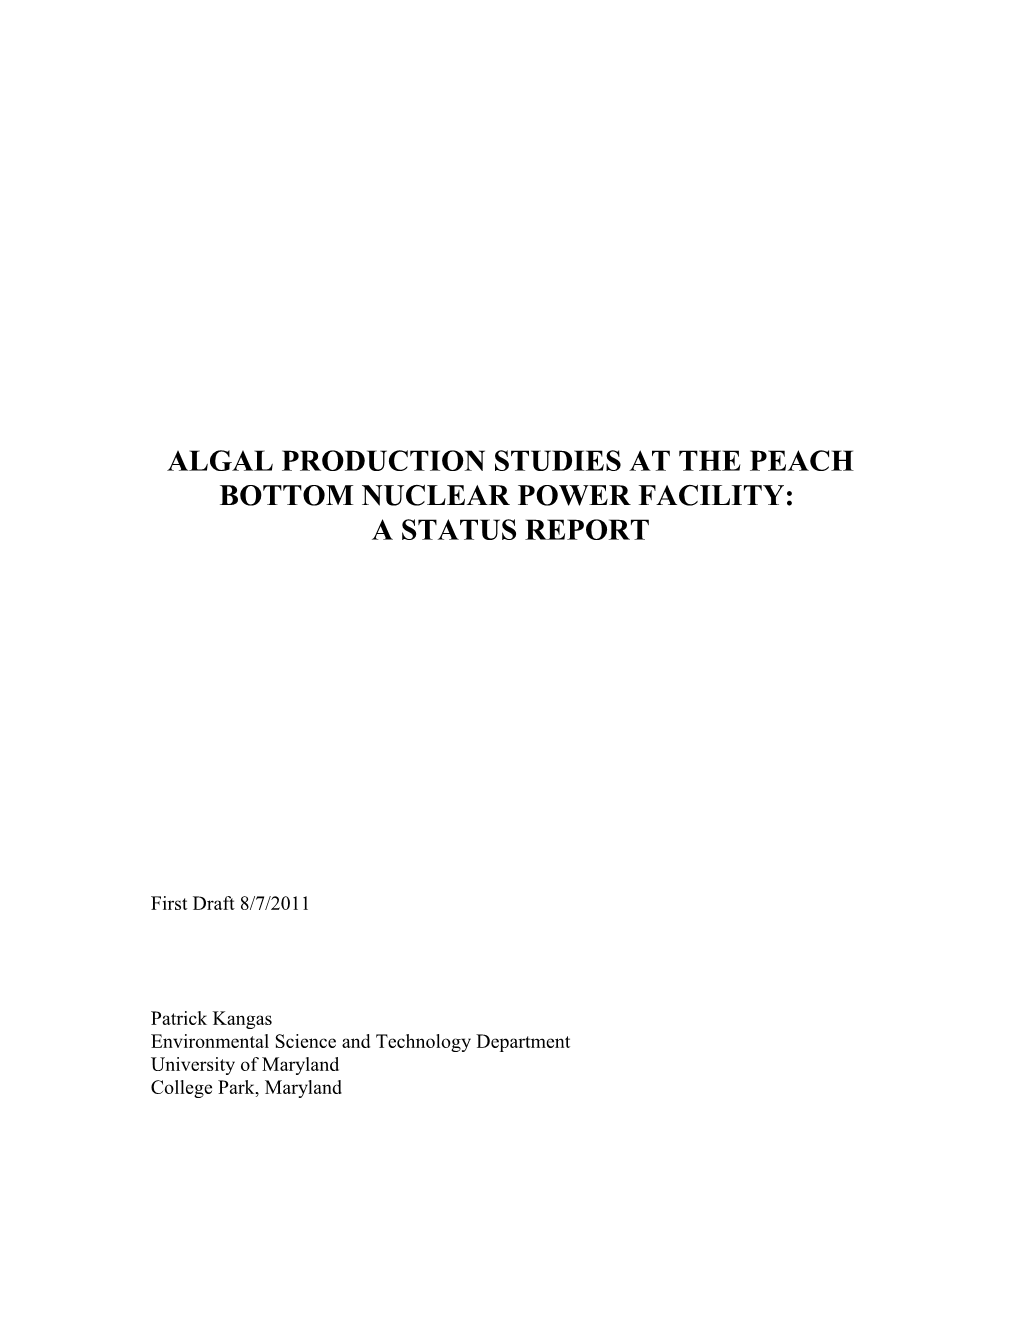 Algal Production Studies at the Peach Bottom Nuclear Power Facility